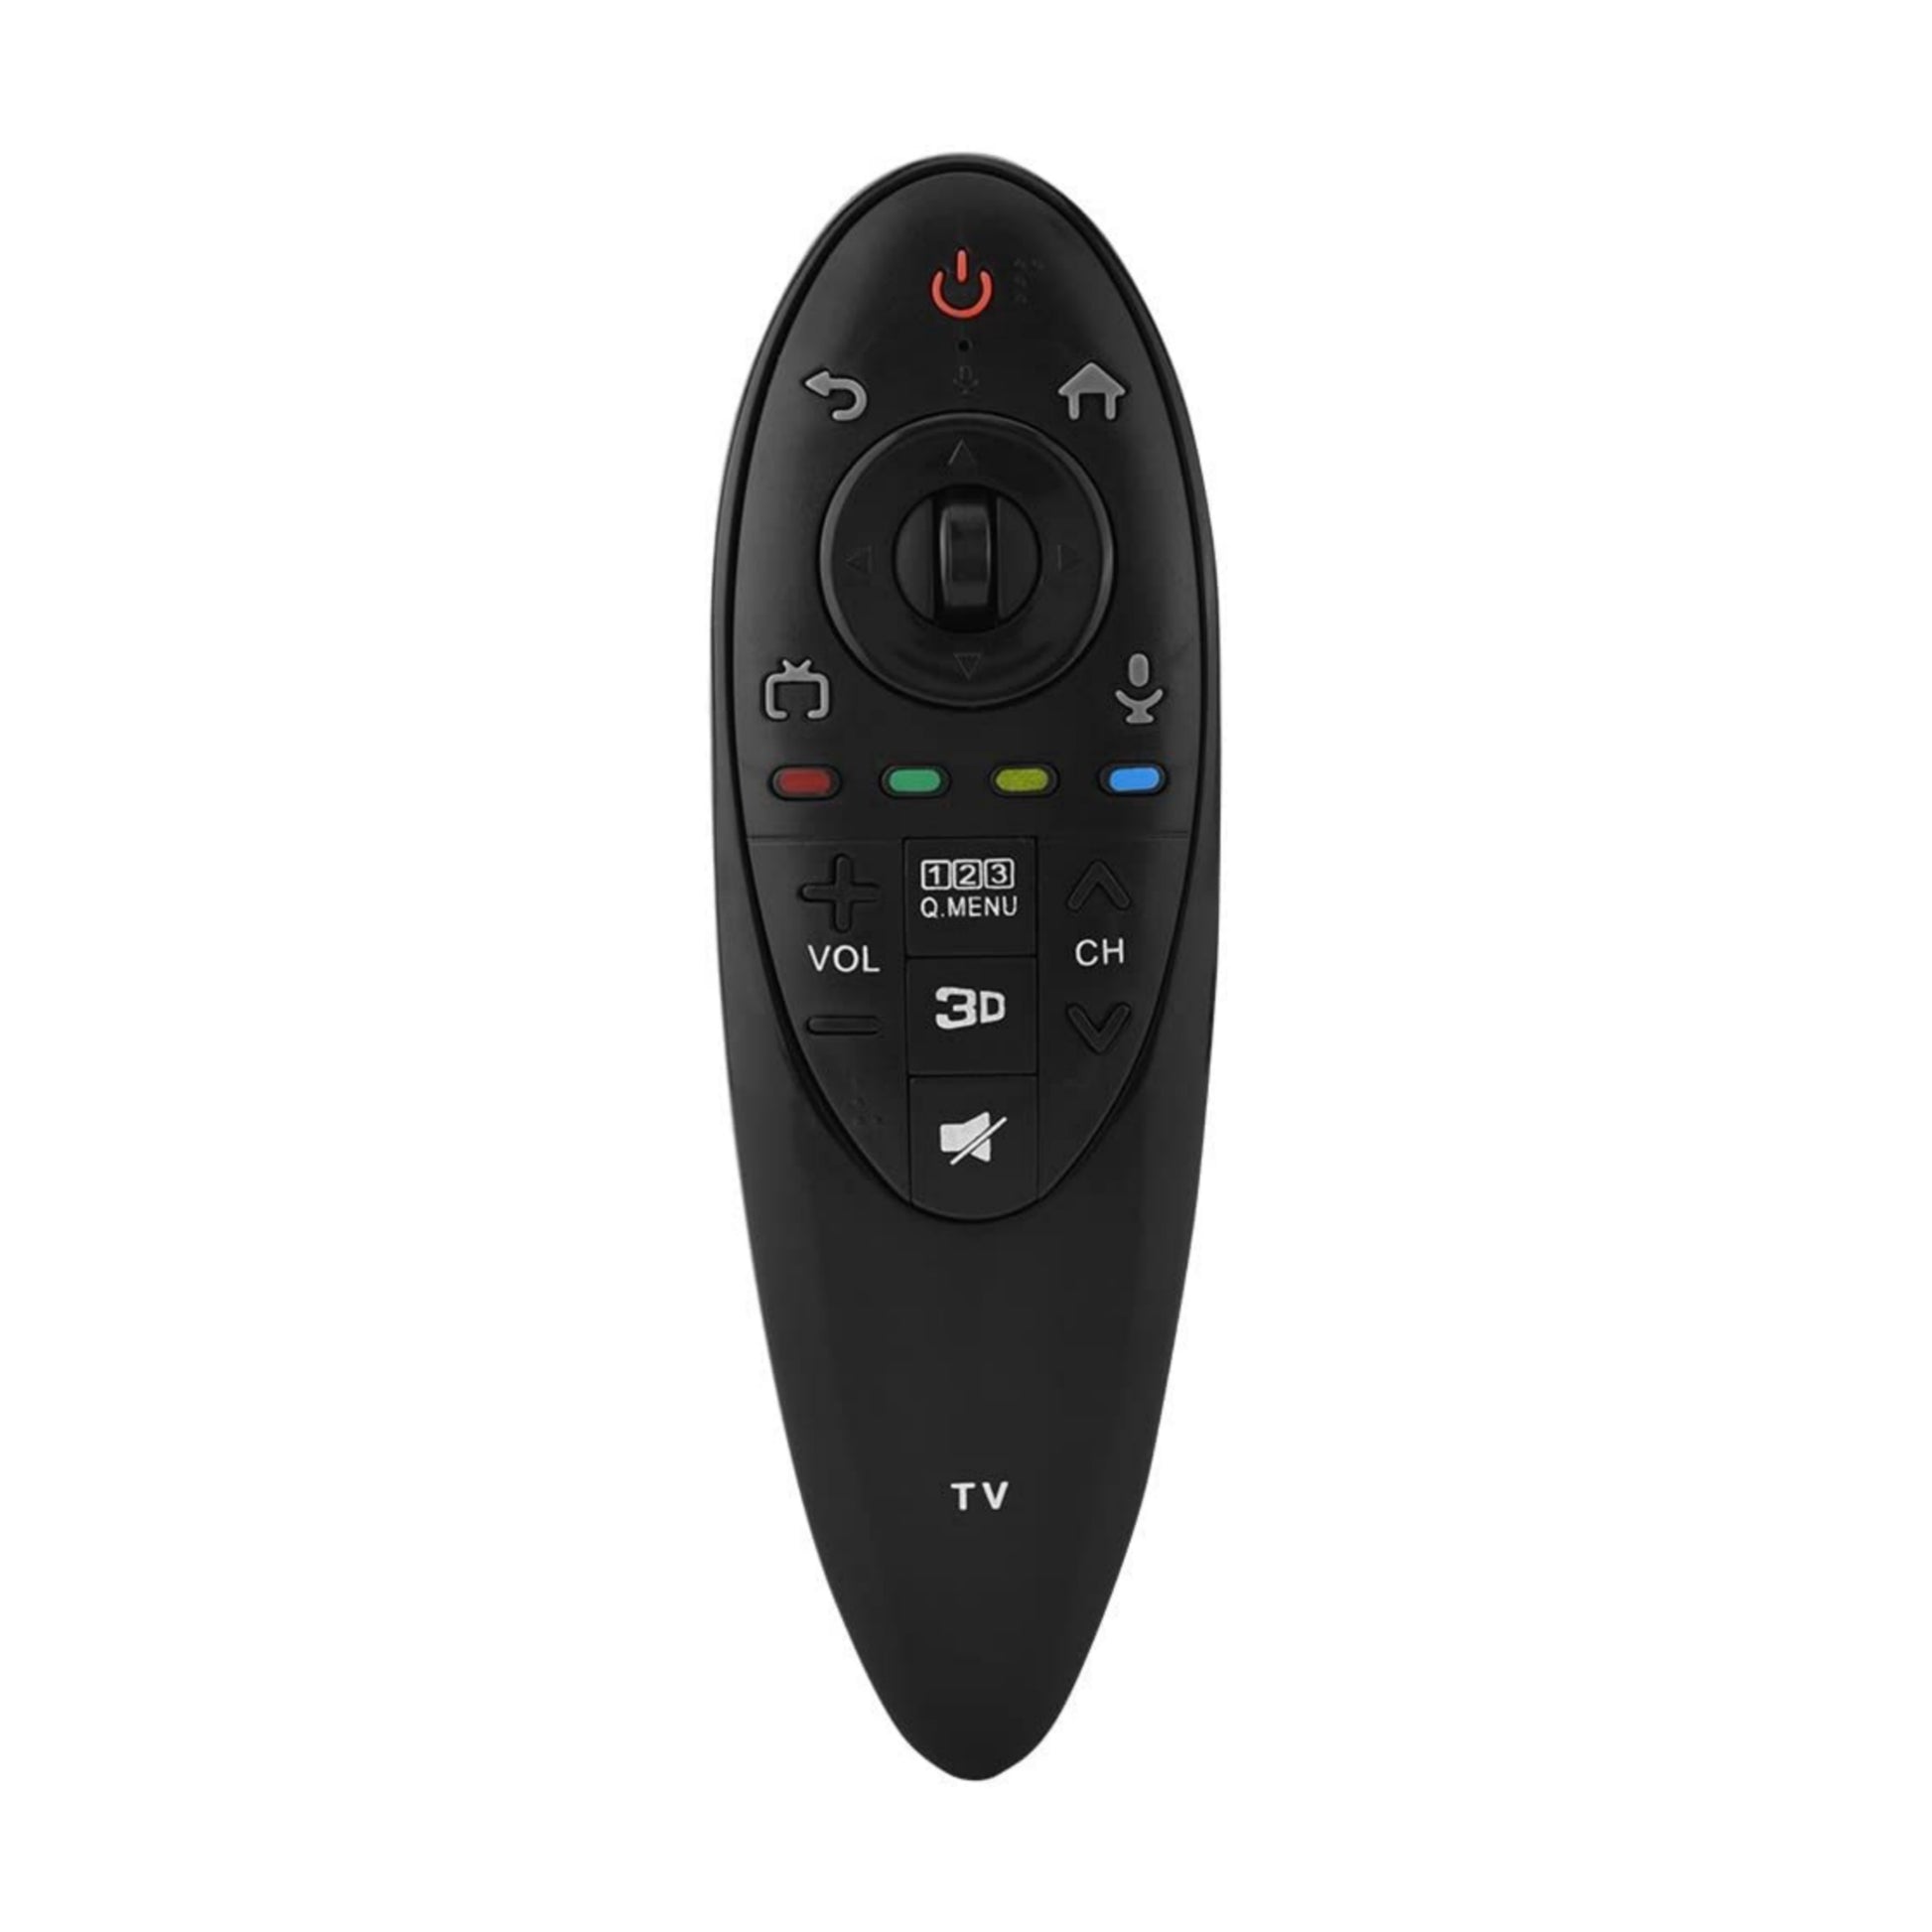 LG Magic Remote Control